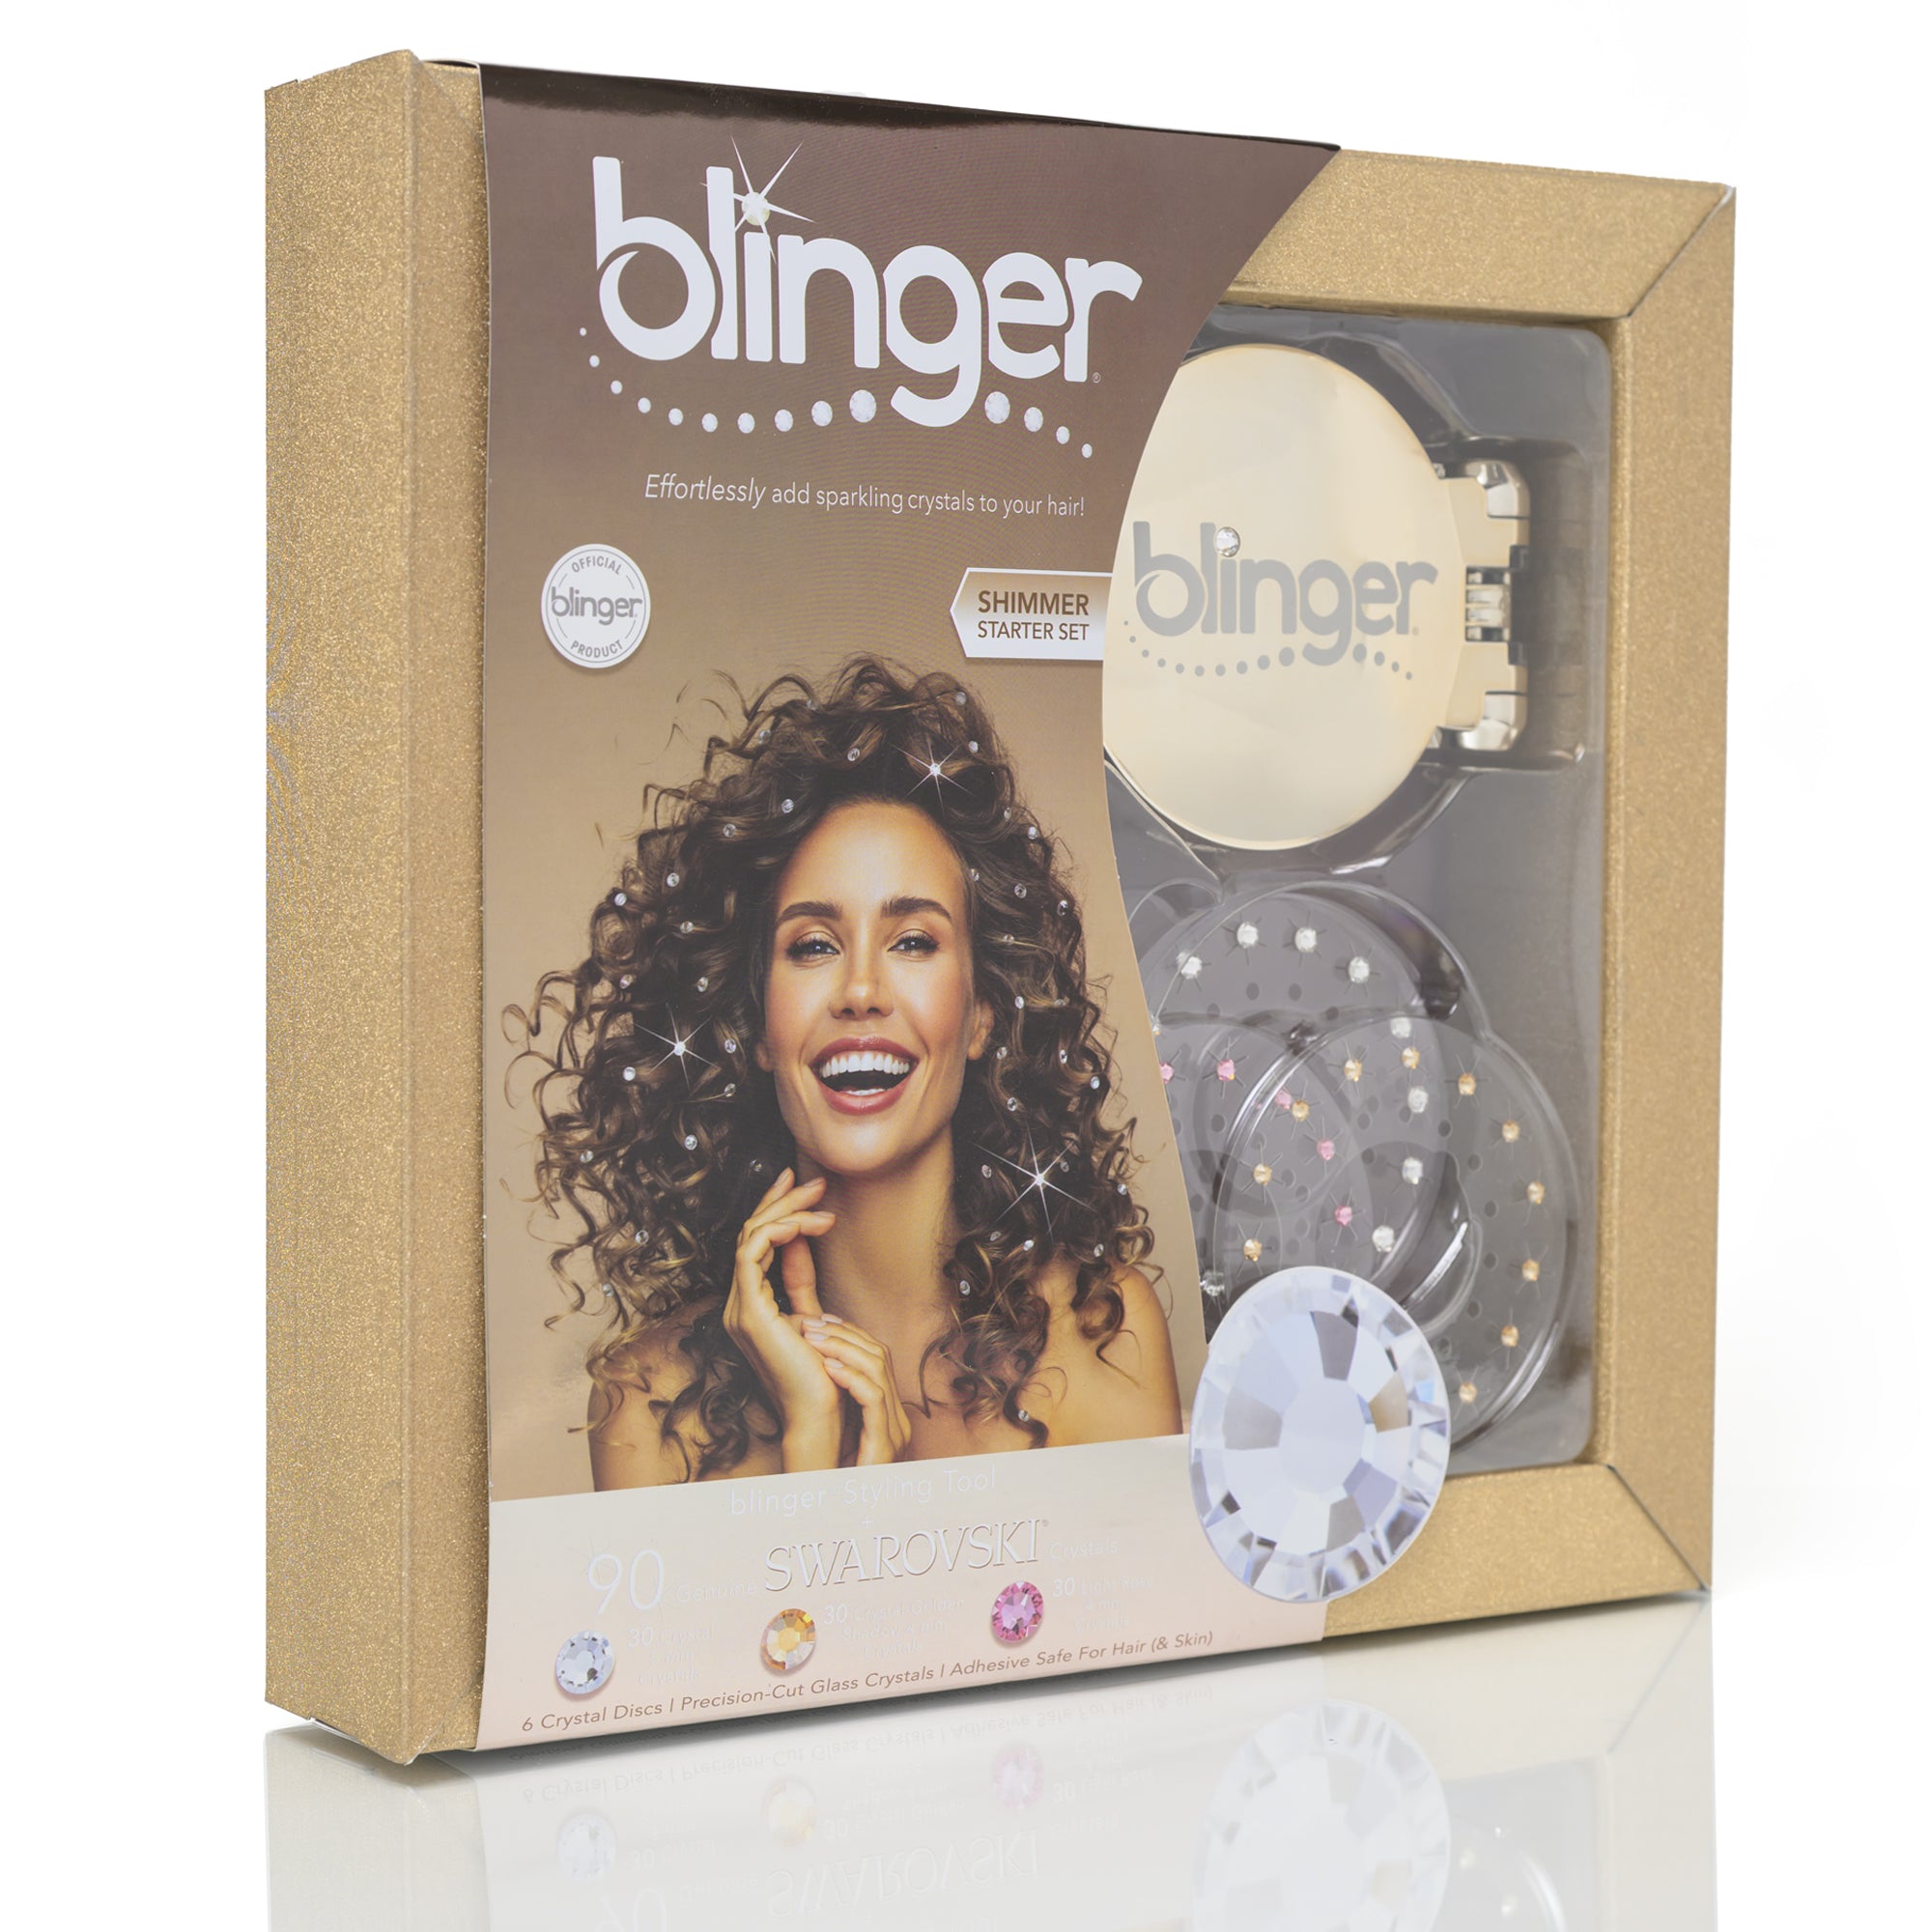 blinger® Shimmer Starter Kit with Gold-Plated blinger® Styling Tool + 90 Precision-Cut Swarovski® Glass Crystals